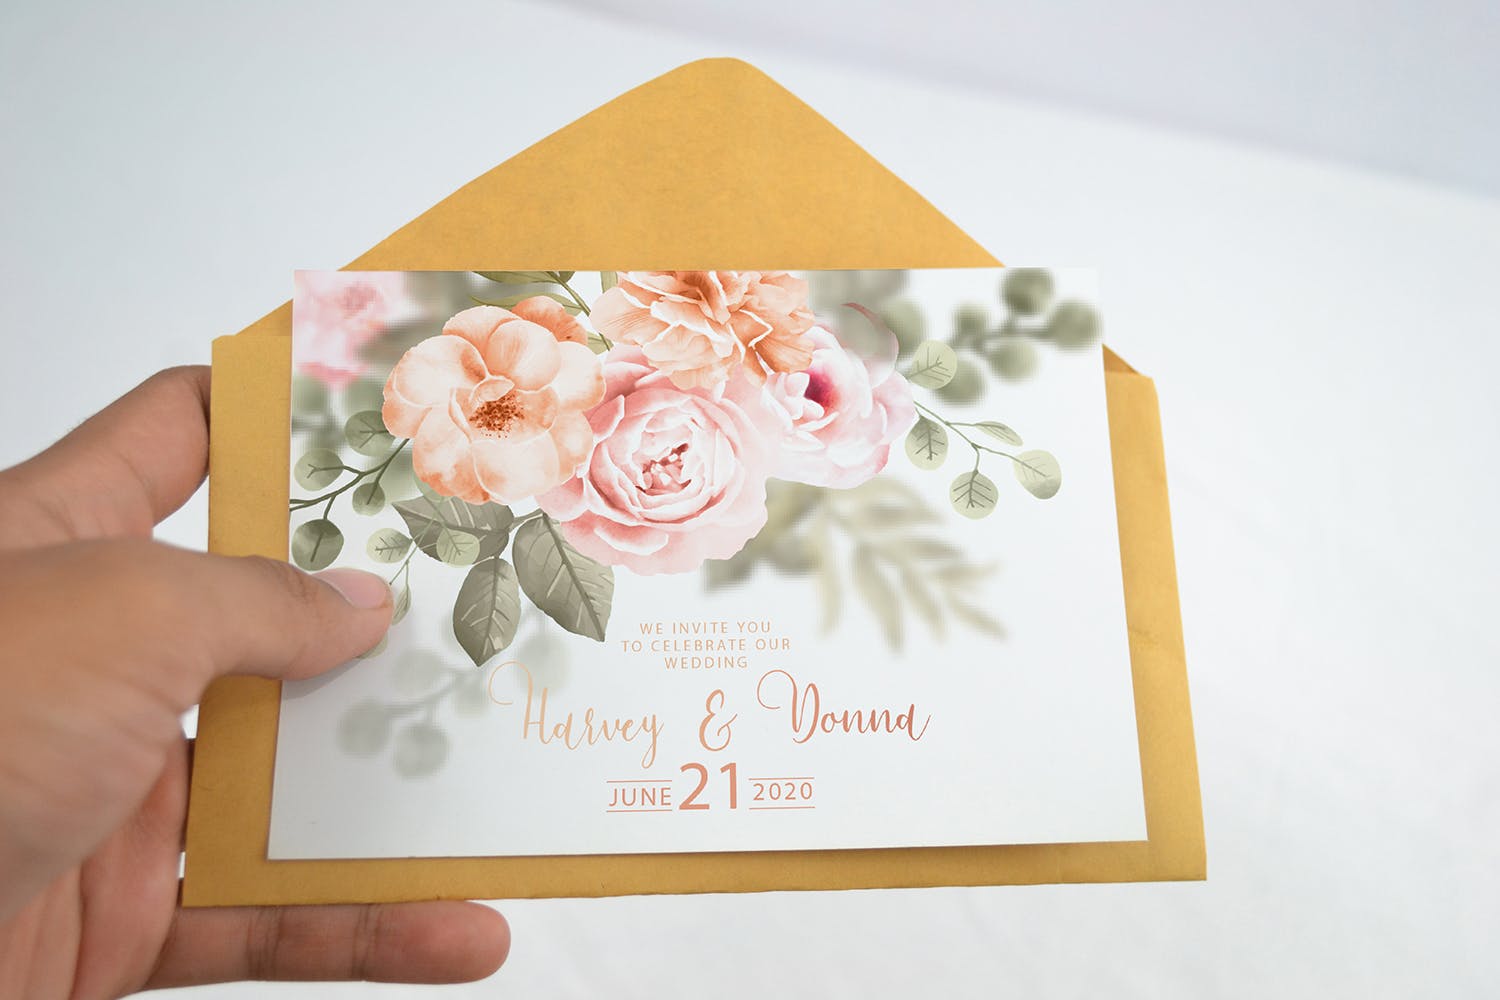 婚礼邀请函设计效果图样机16设计网精选模板v2 Realistic Wedding Invitation Card Mockup V2插图(1)